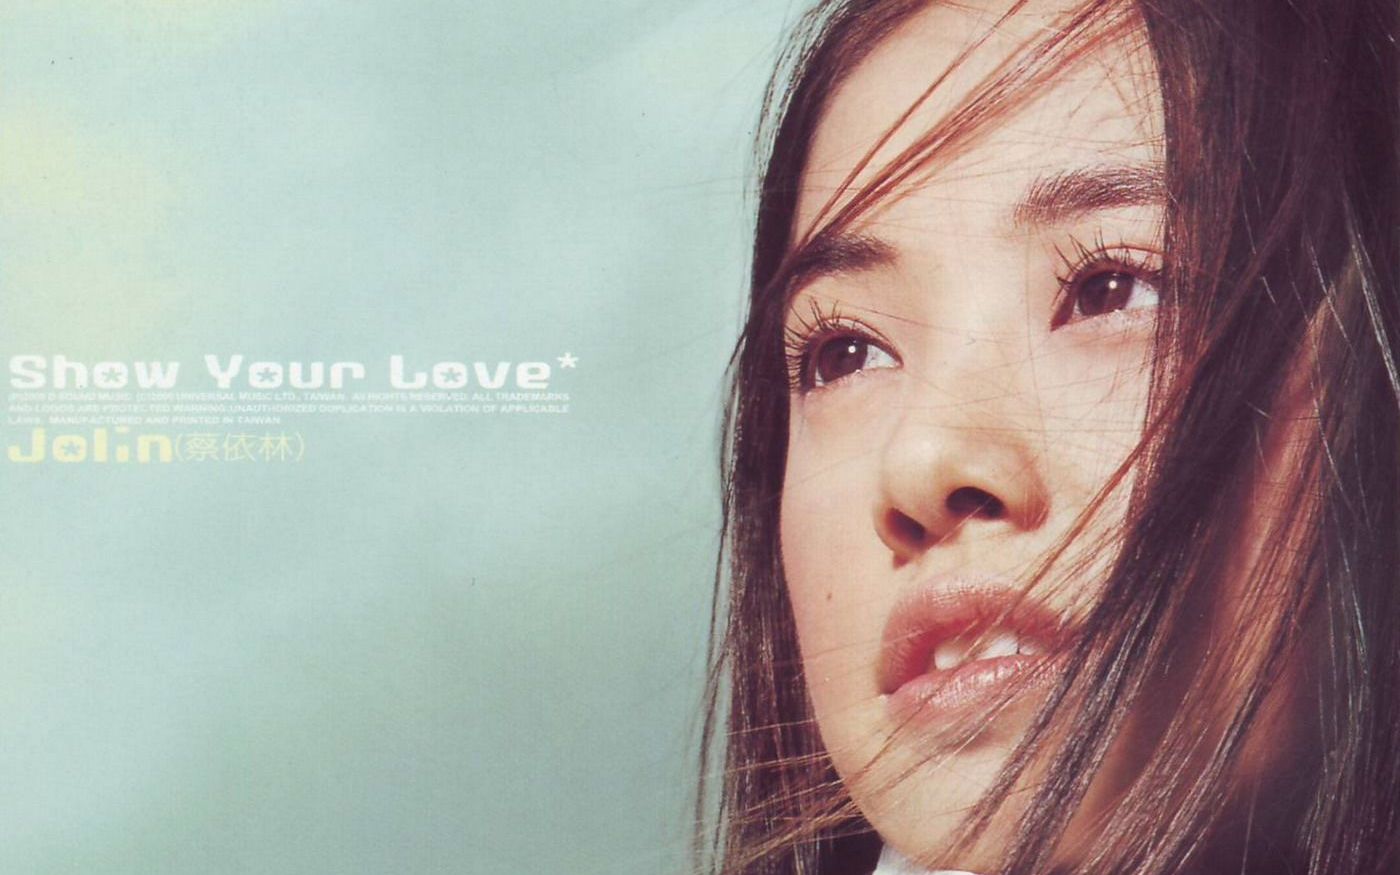 《show your love》蔡依林jolin tsai第三张国语专辑mv合集